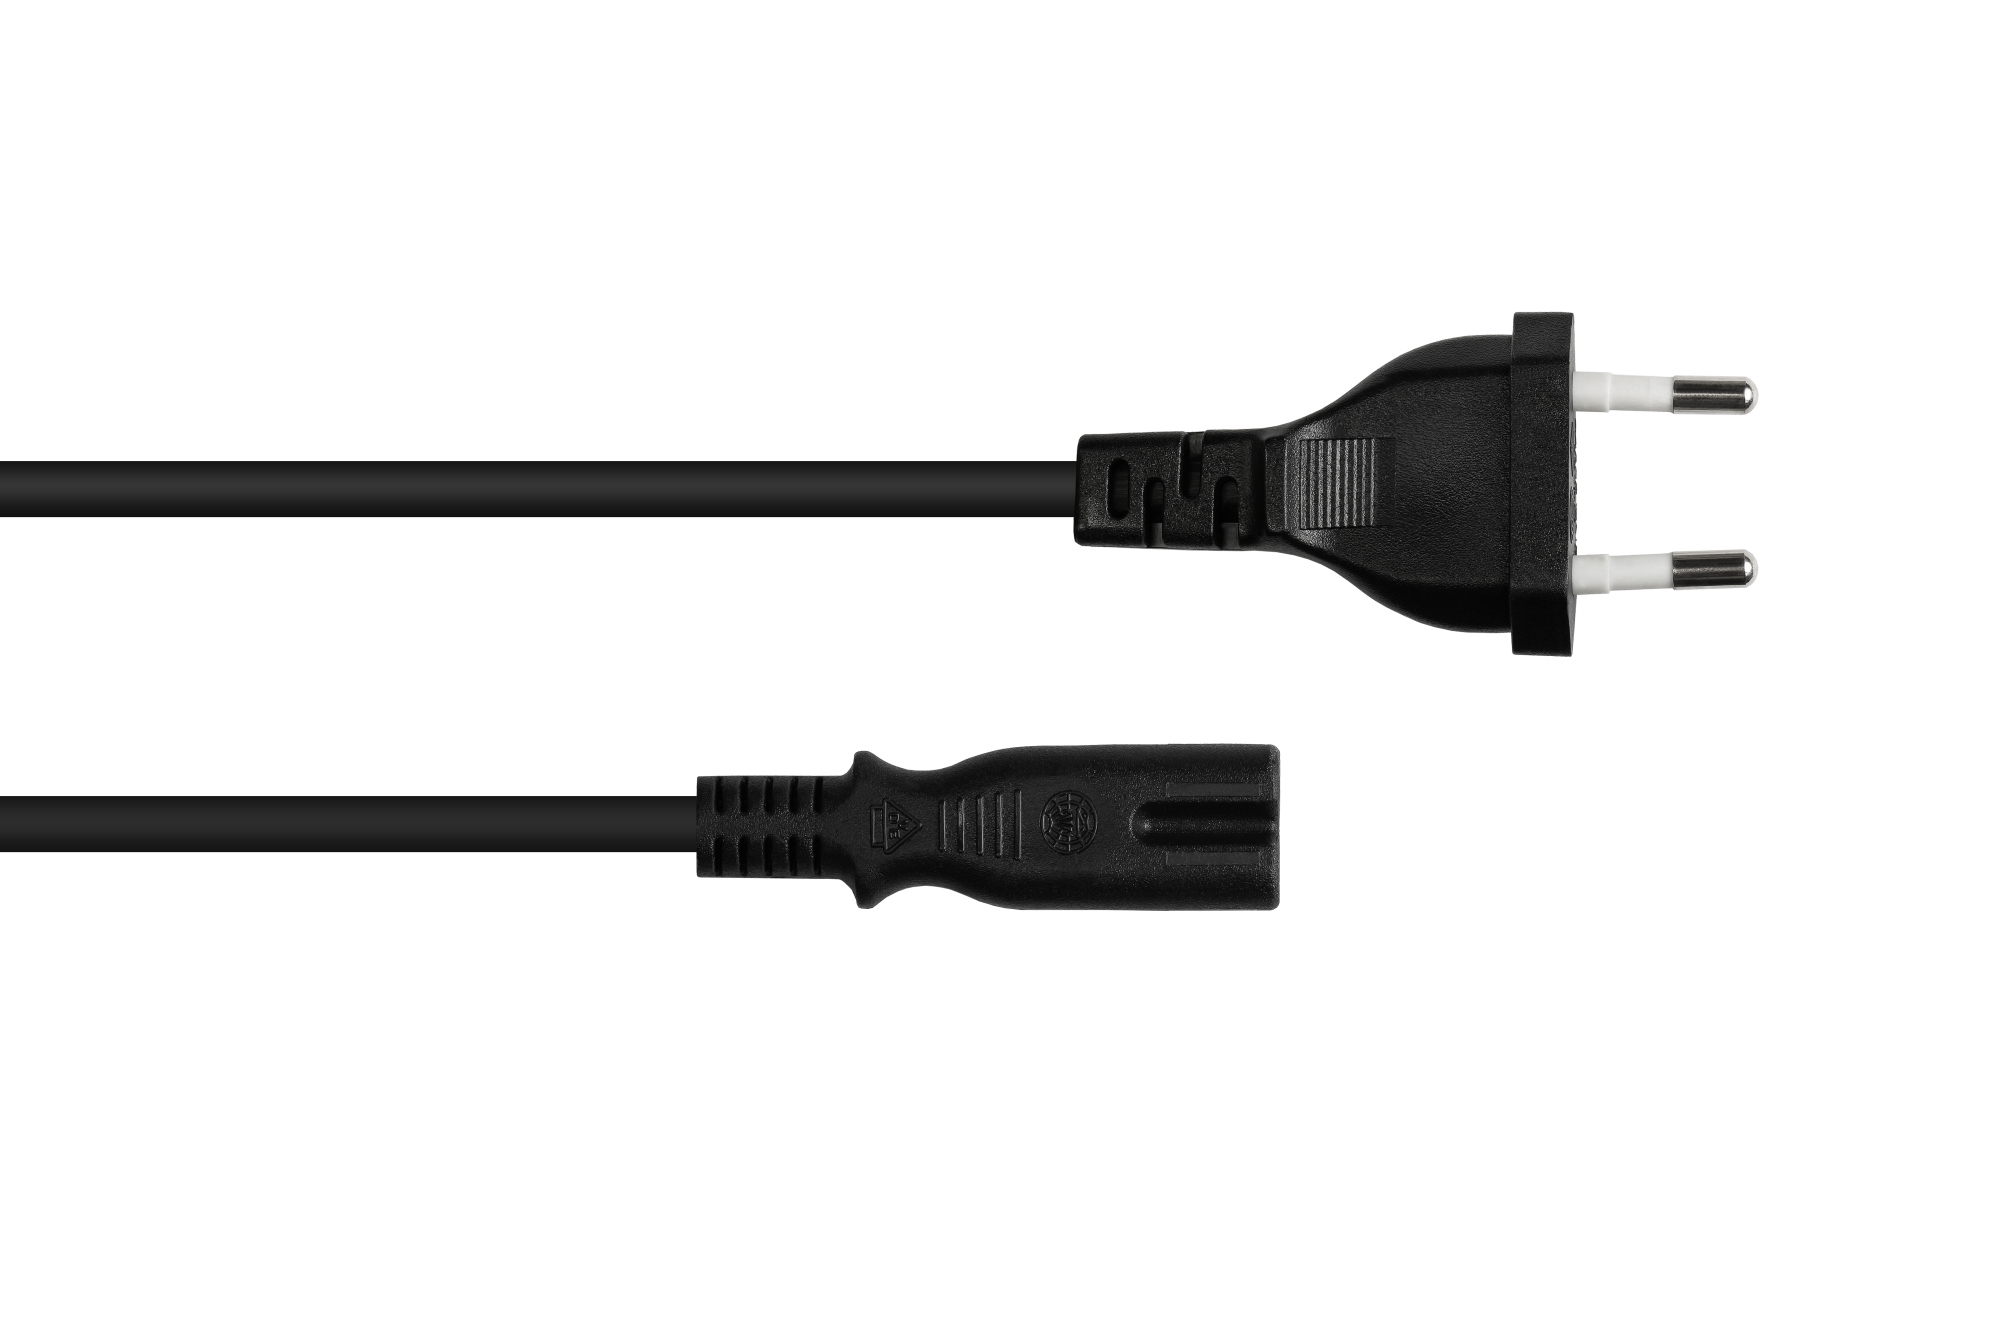 Euro-Netzkabel Euro-Stecker Typ C (gerade) an C7/Euro 8 Buchse (gerade), schwarz, 0,75 mm², 3 m, Goo